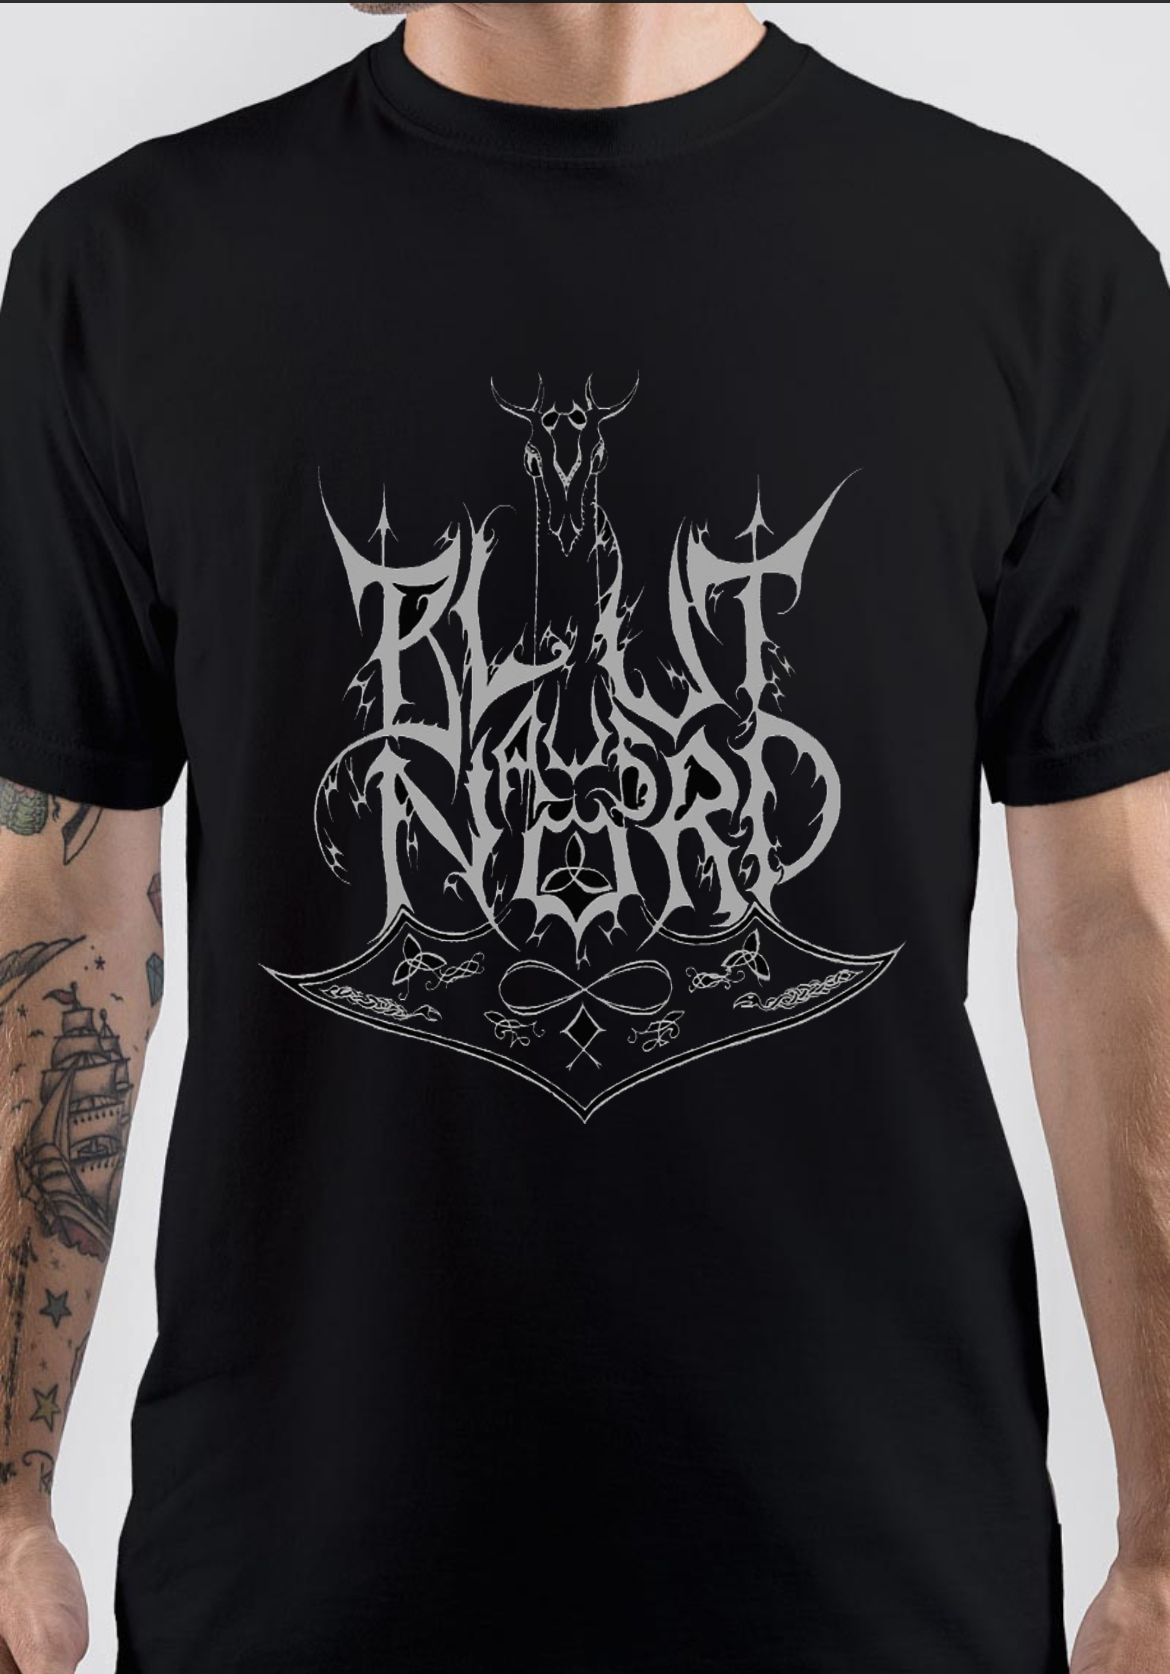 Blut Aus Nord T-Shirt And Merchandise